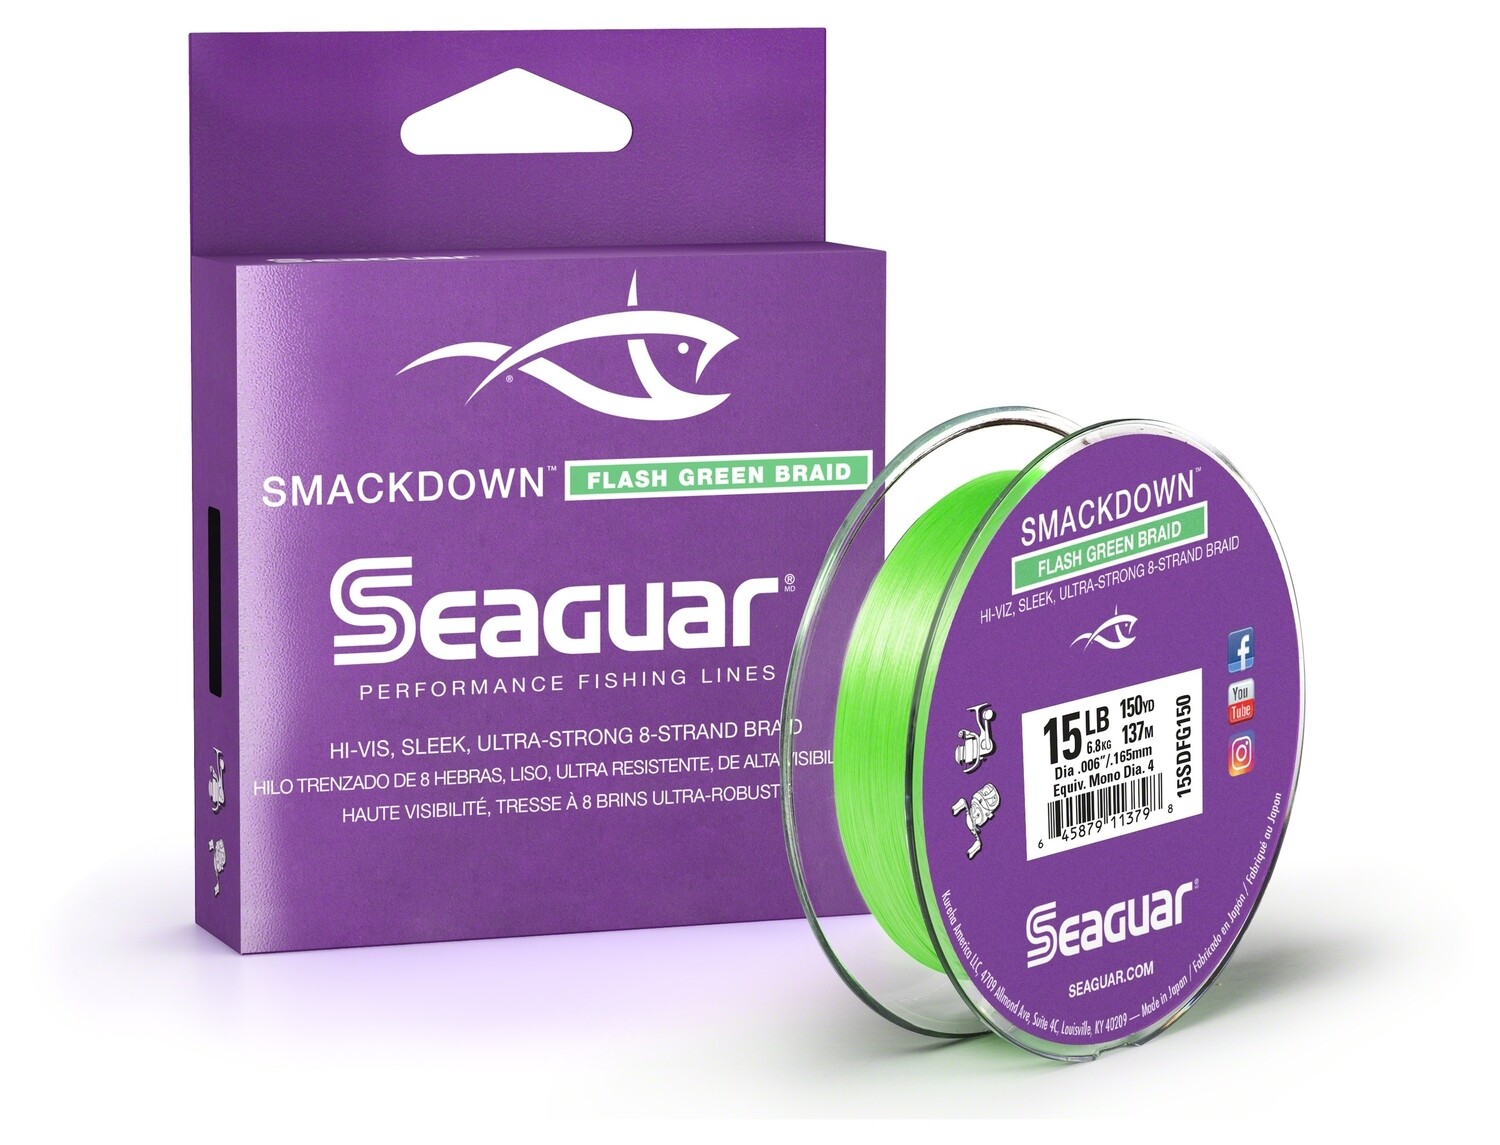 Seaguar 20SDFG150 Smackdown Braided Line Flash Green 20lb 150yd 